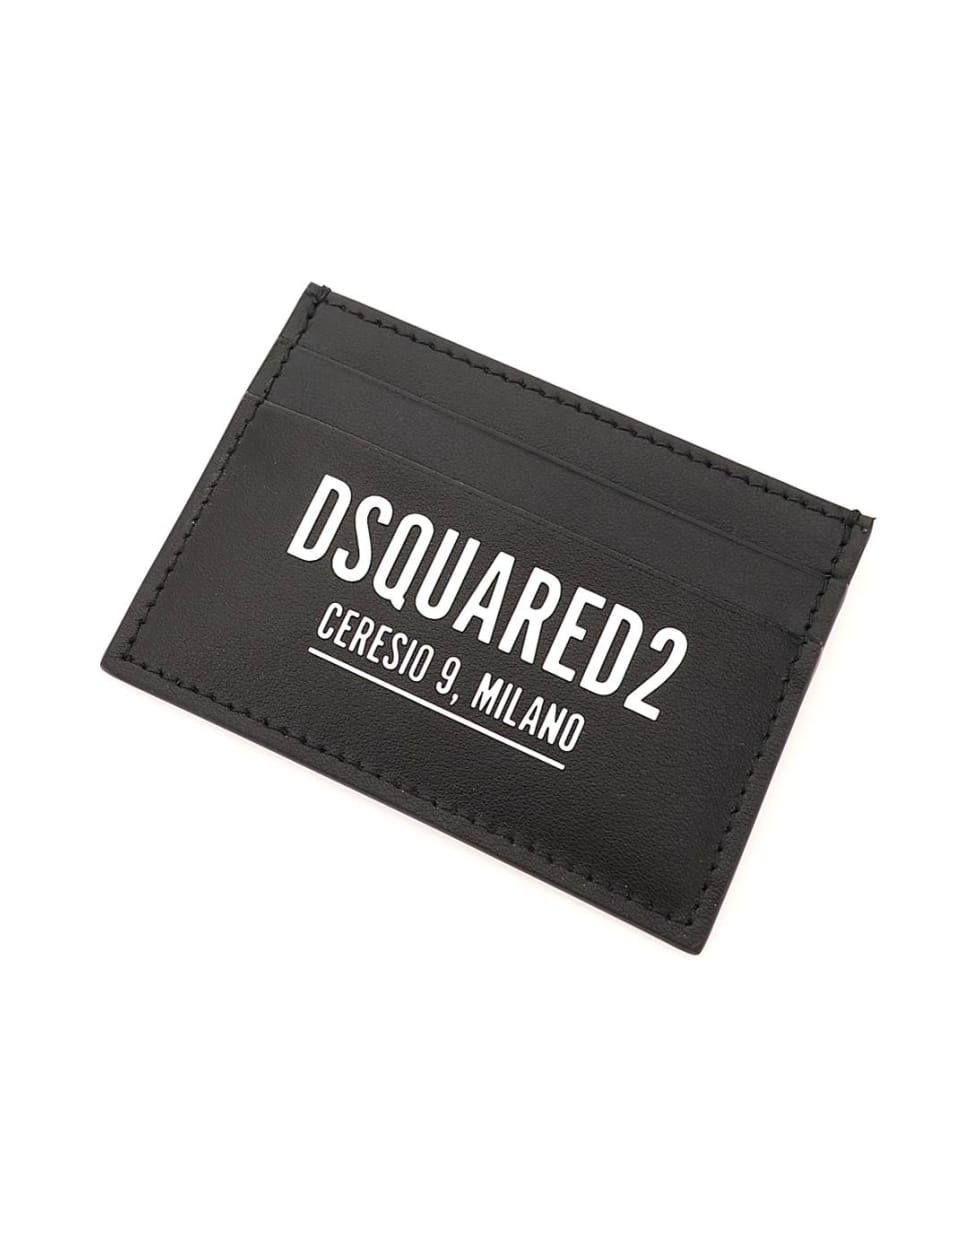 Dsquared2 'ceresio 9' Leather Cardholder - BLACK (Black)